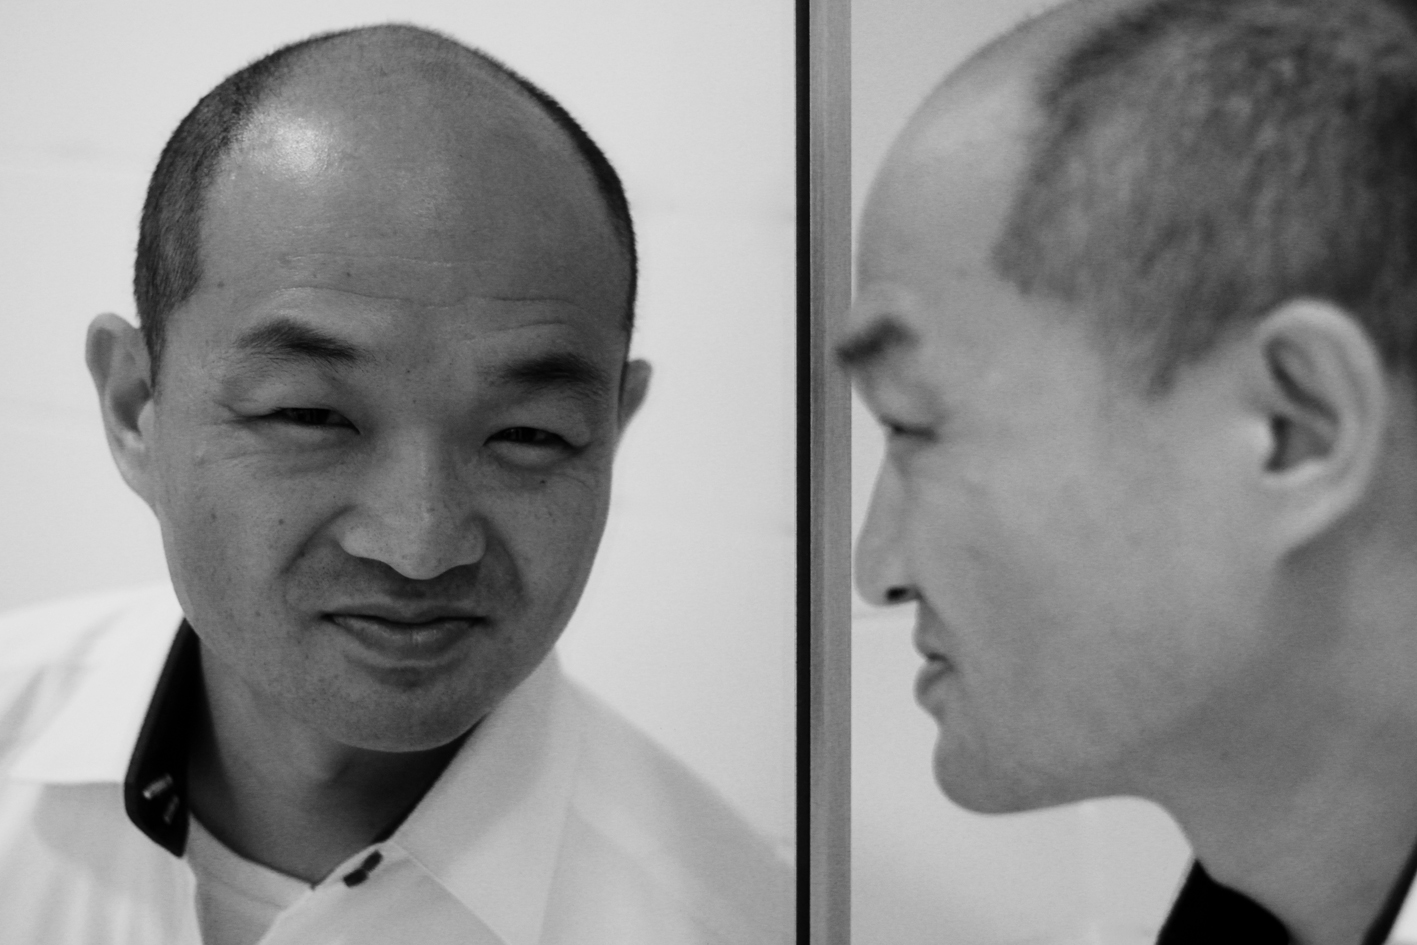 Philip Kim's reflection in the mirror